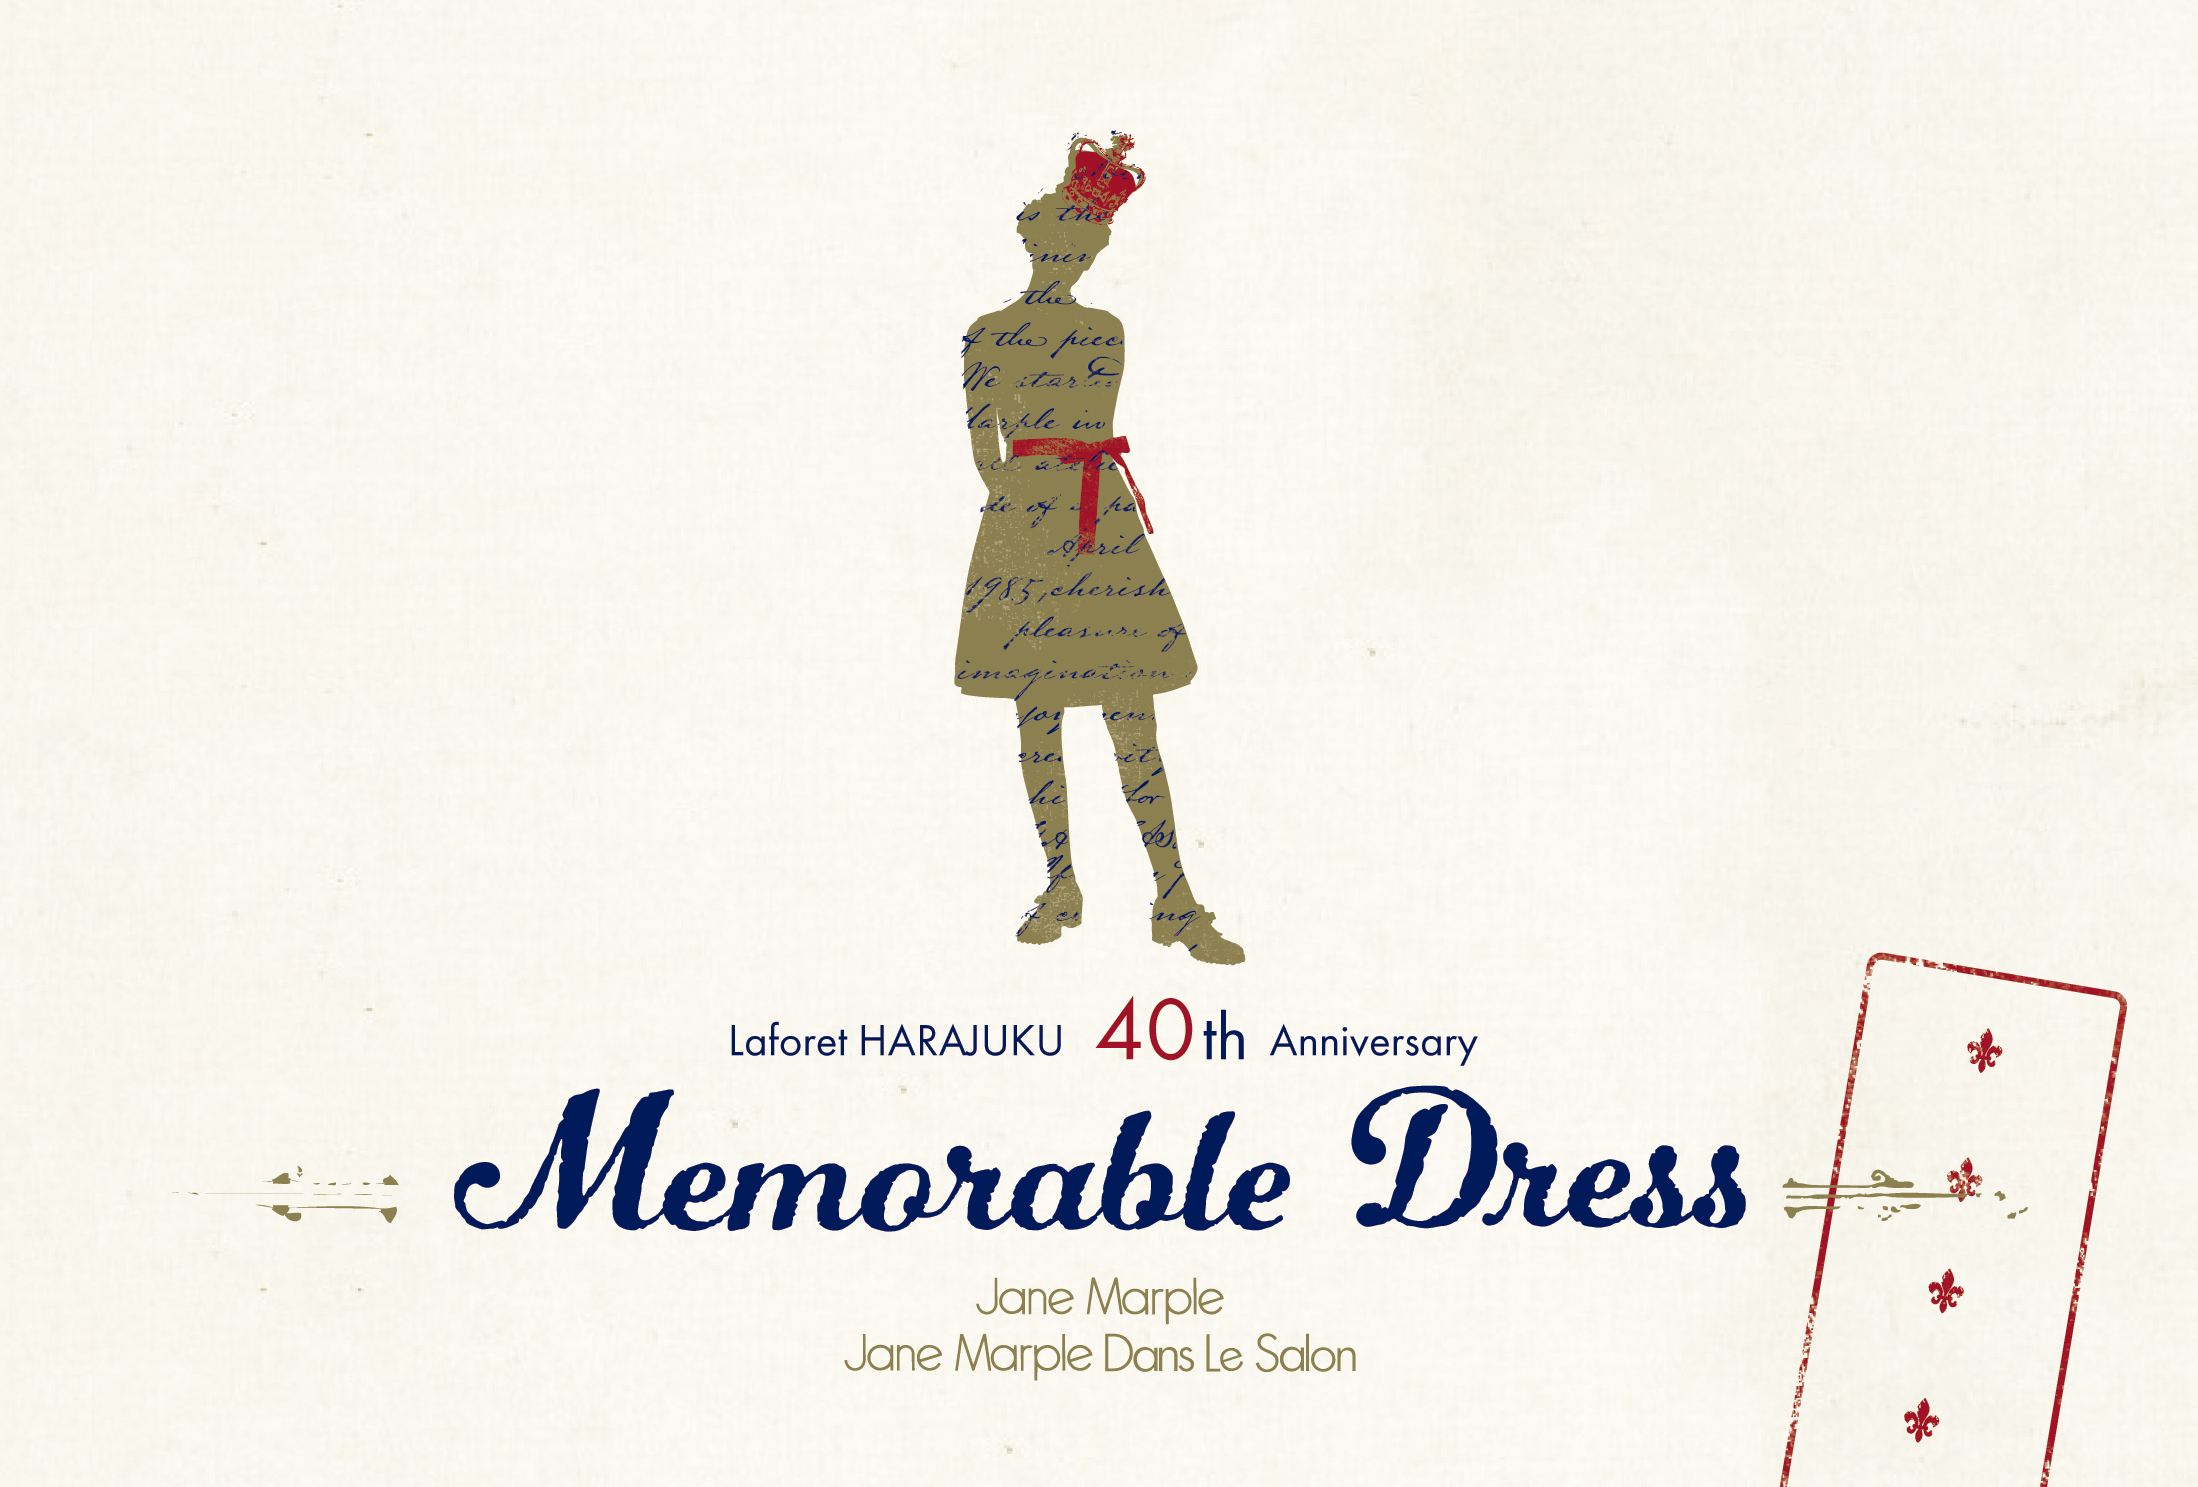 【Jane Marple HARAJUKU】Memorable Dress | Jane Marple Official Web Site